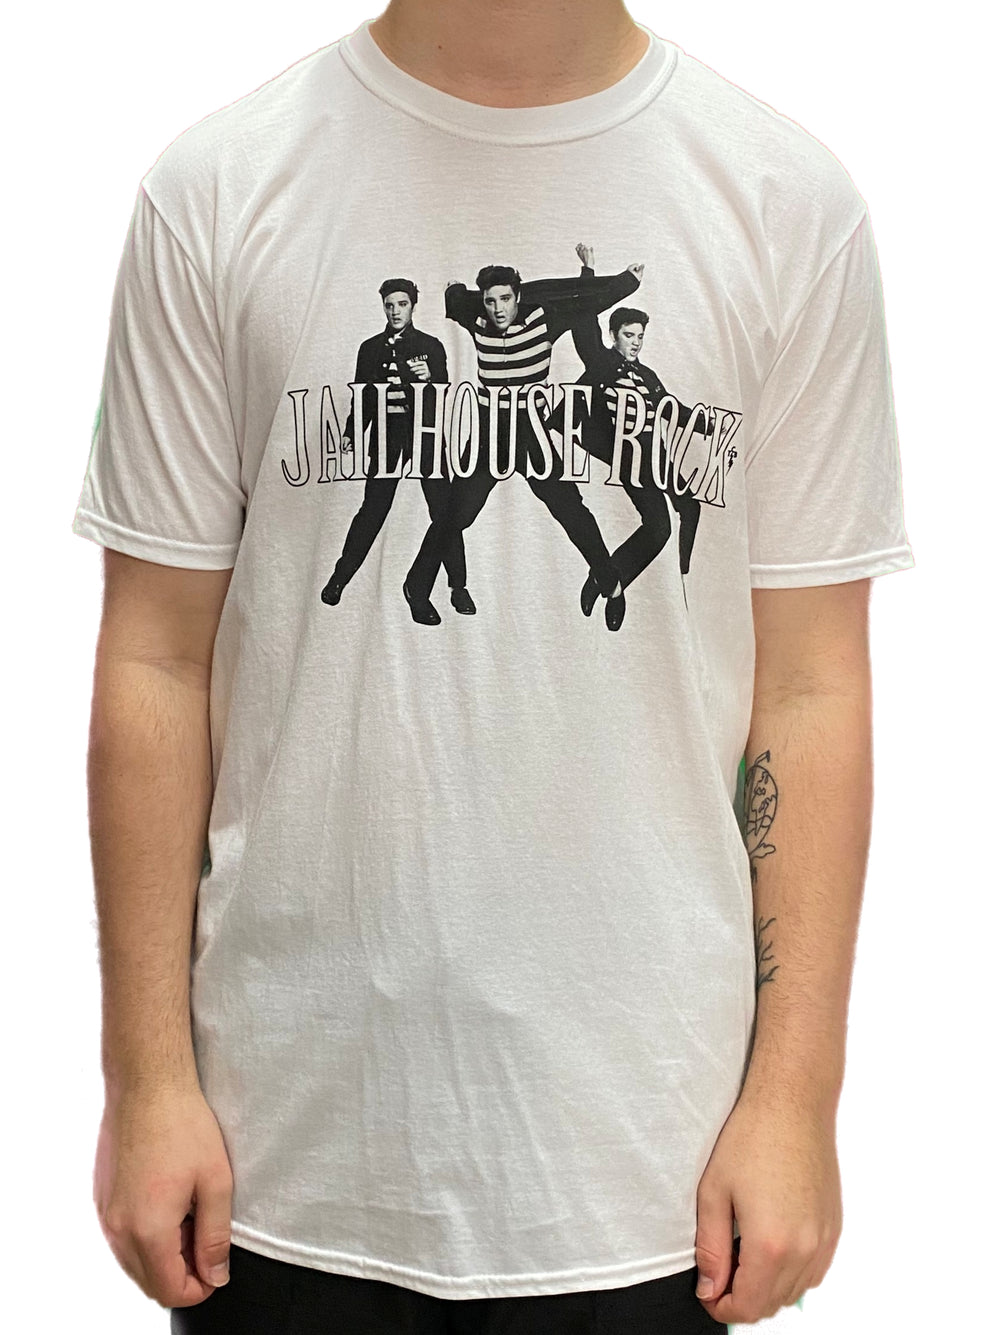 Elvis Presley - Jailhouse Rock Unisex Official T Shirt Various Sizes NEW